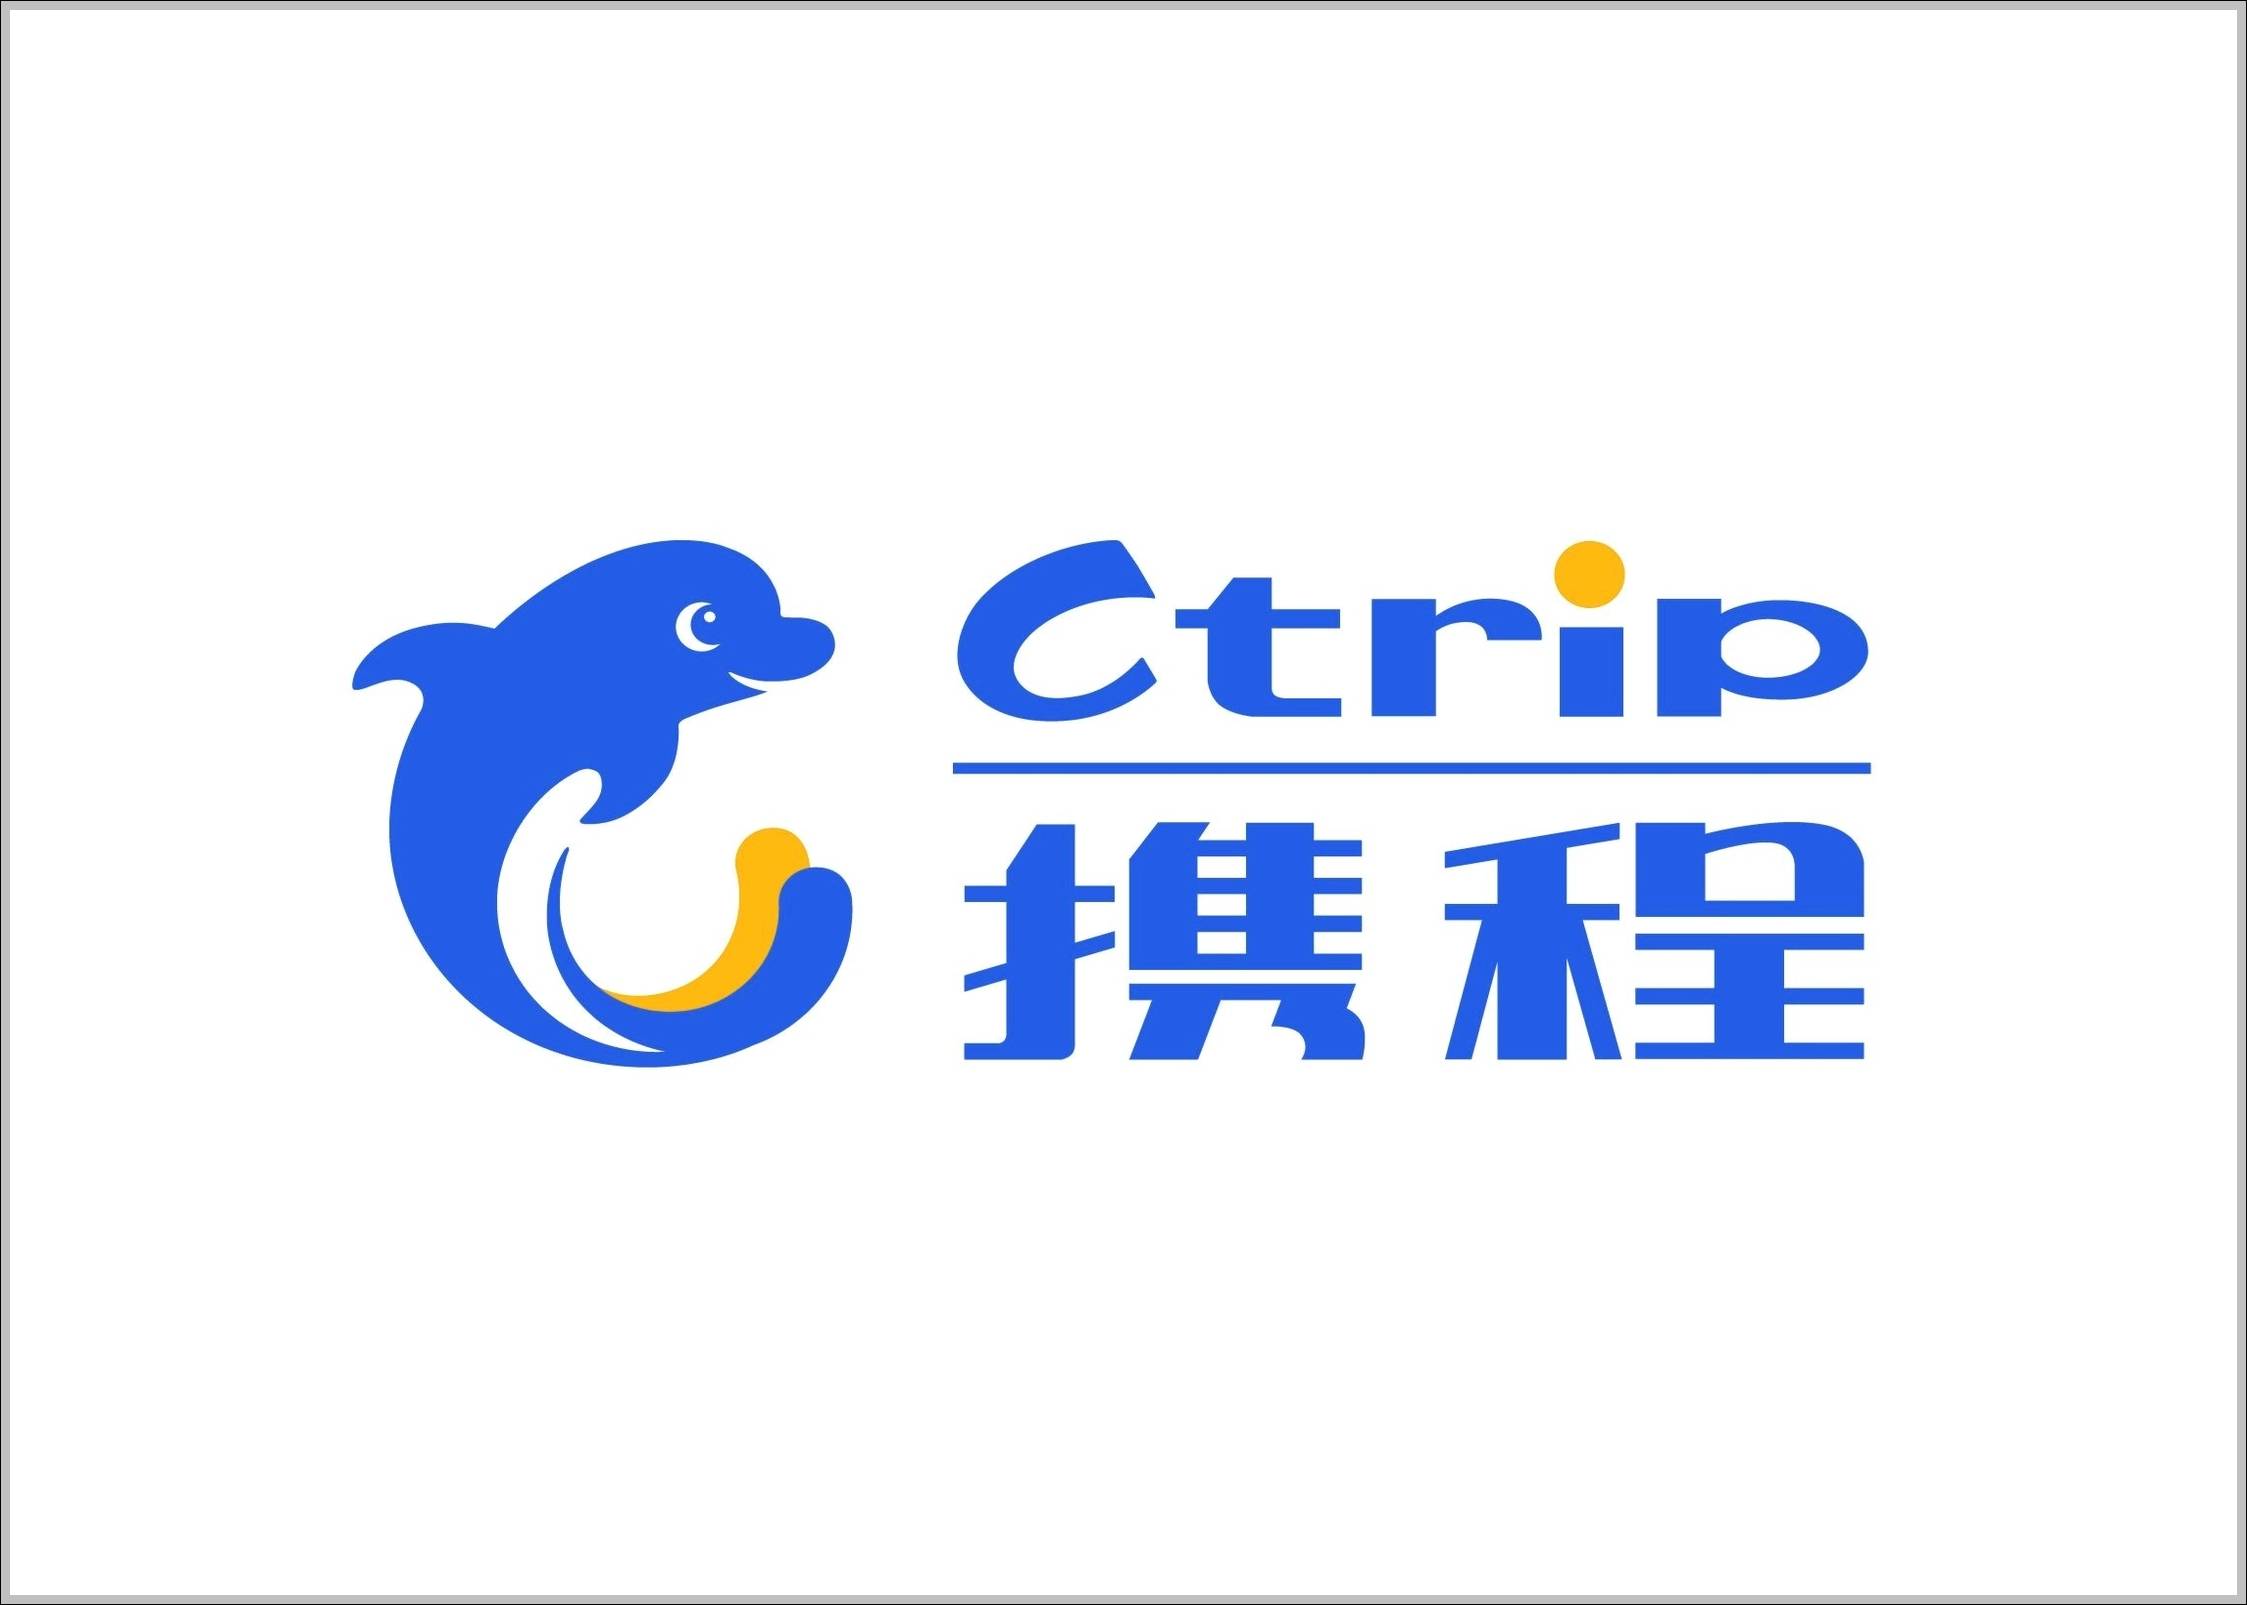 Ctrip logo and sign